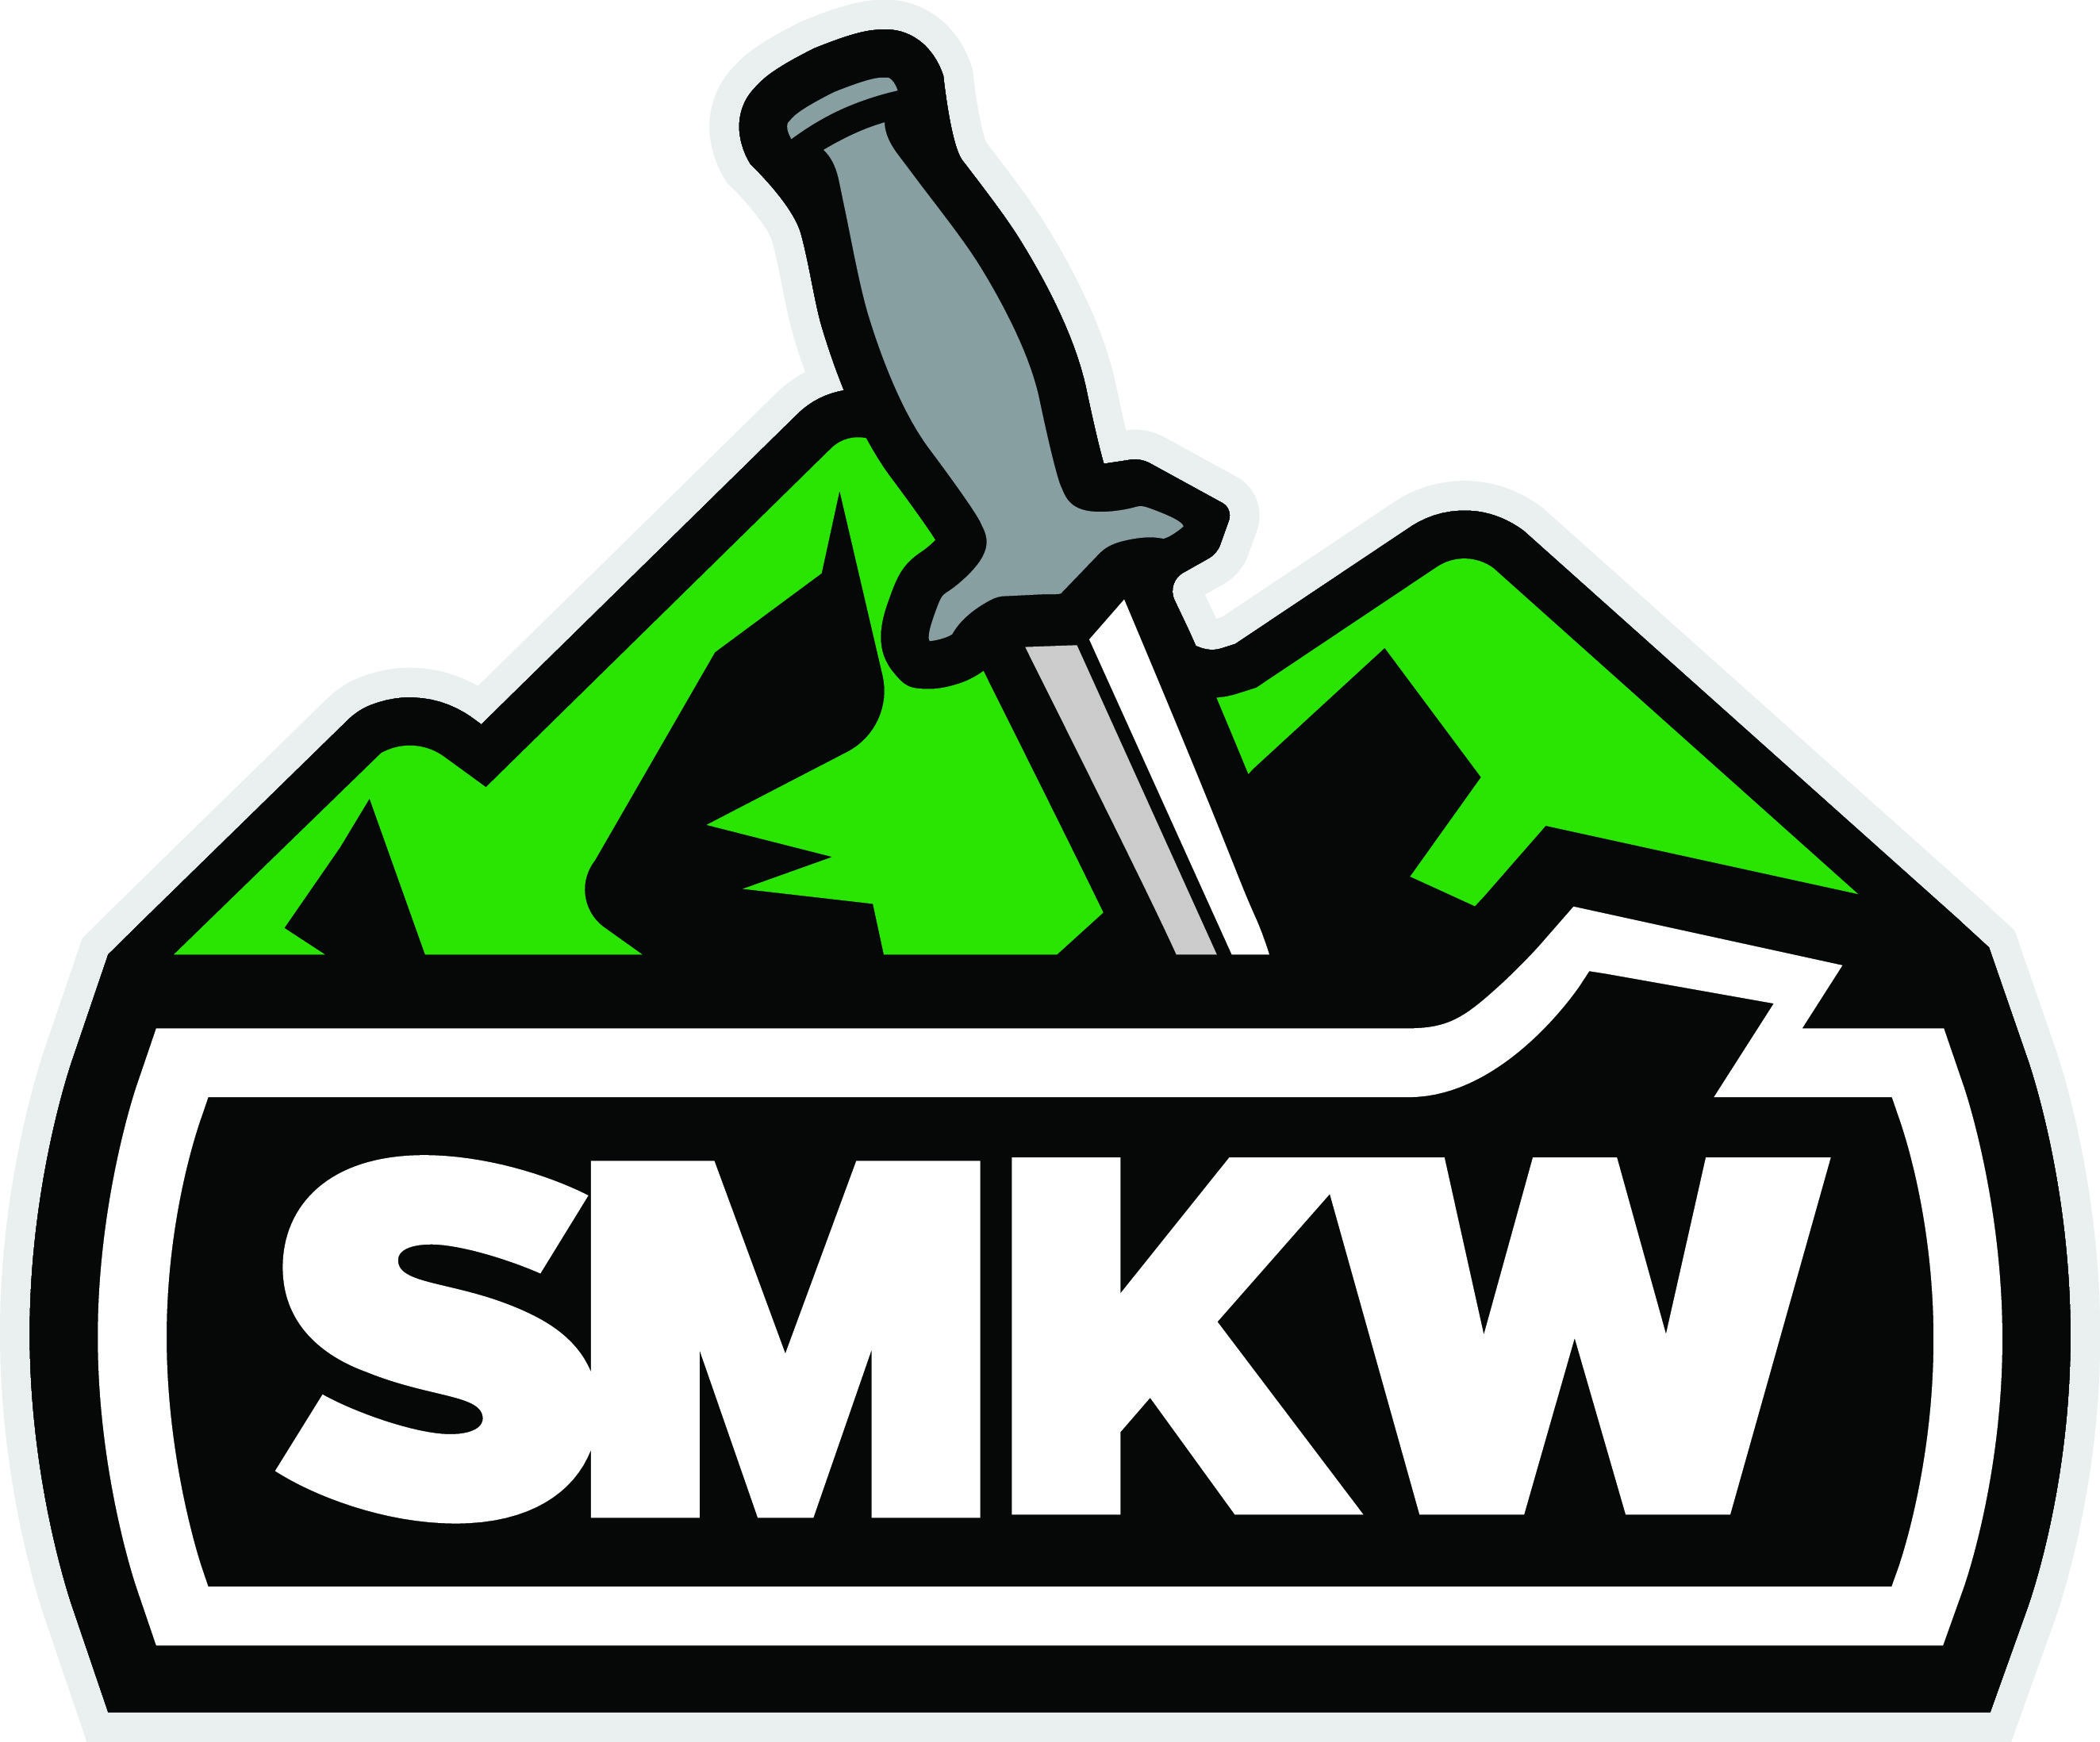 SMKW Logo